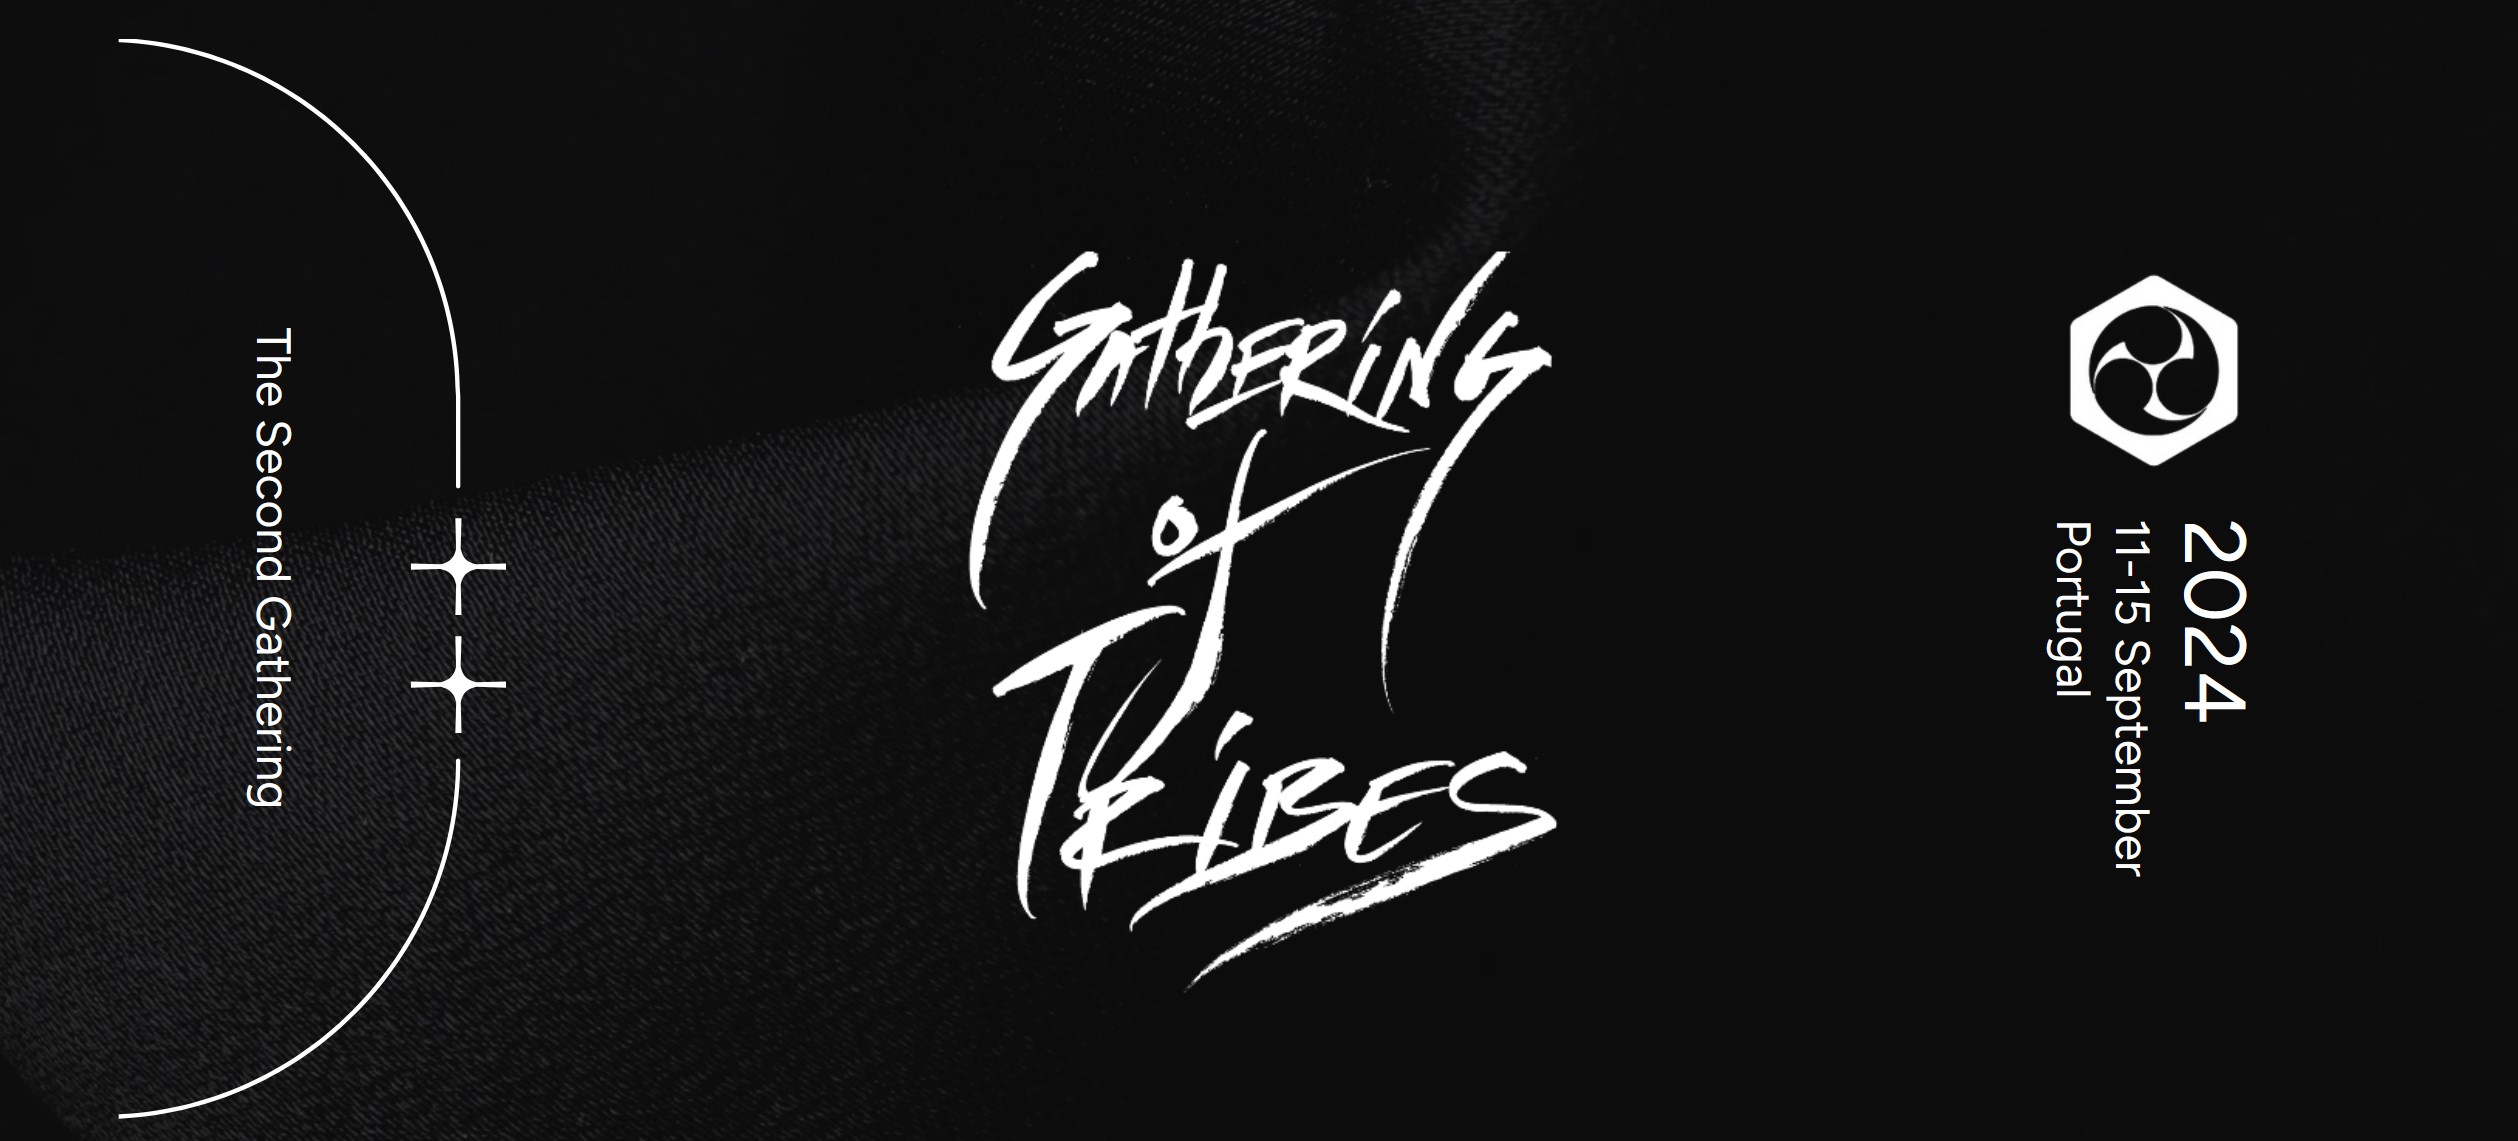 Gathering of Tribes Logo